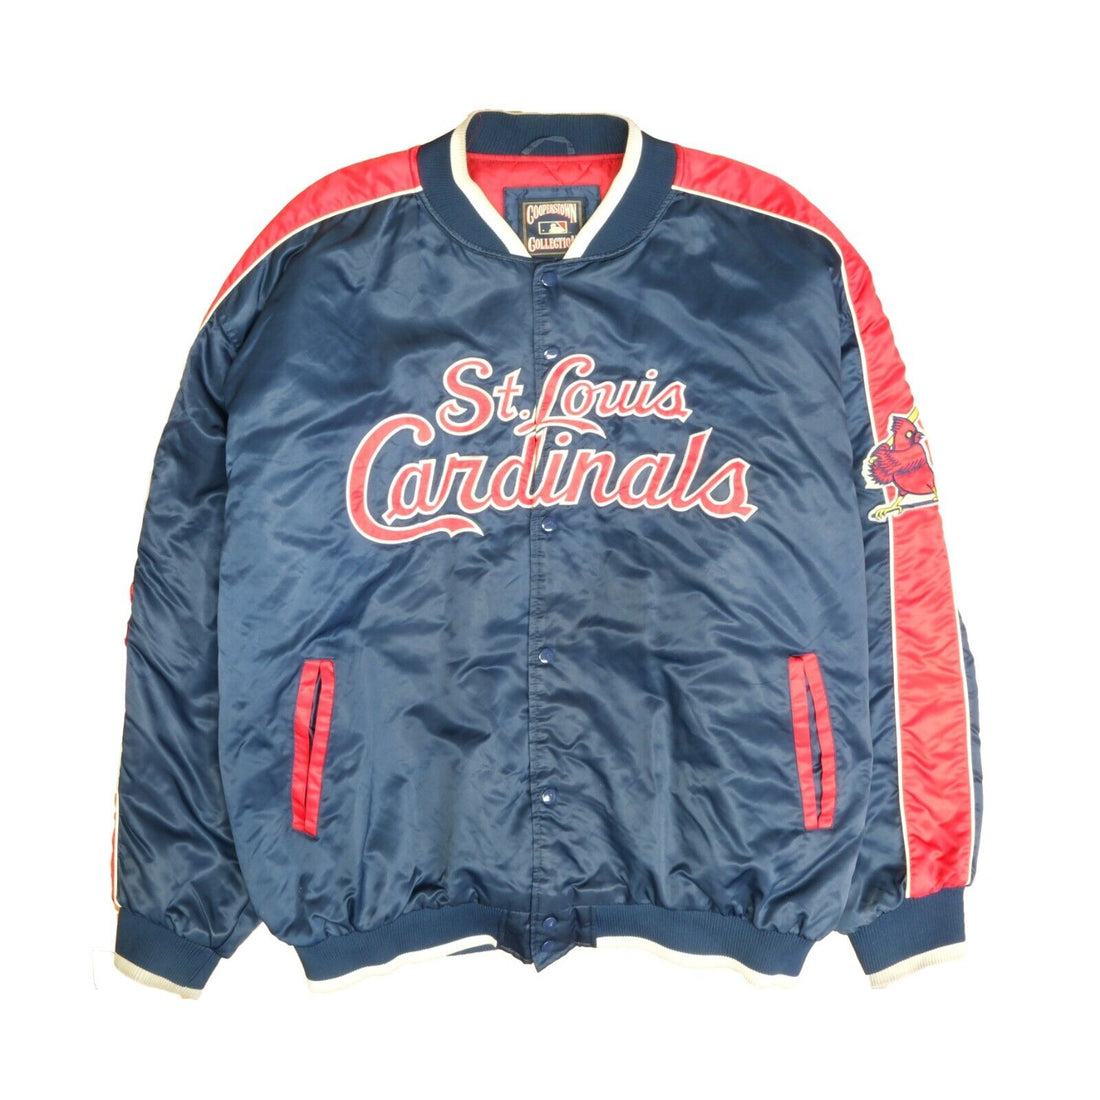 MLB Red St. Louis Cardinals Varsity Jacket - Maker of Jacket